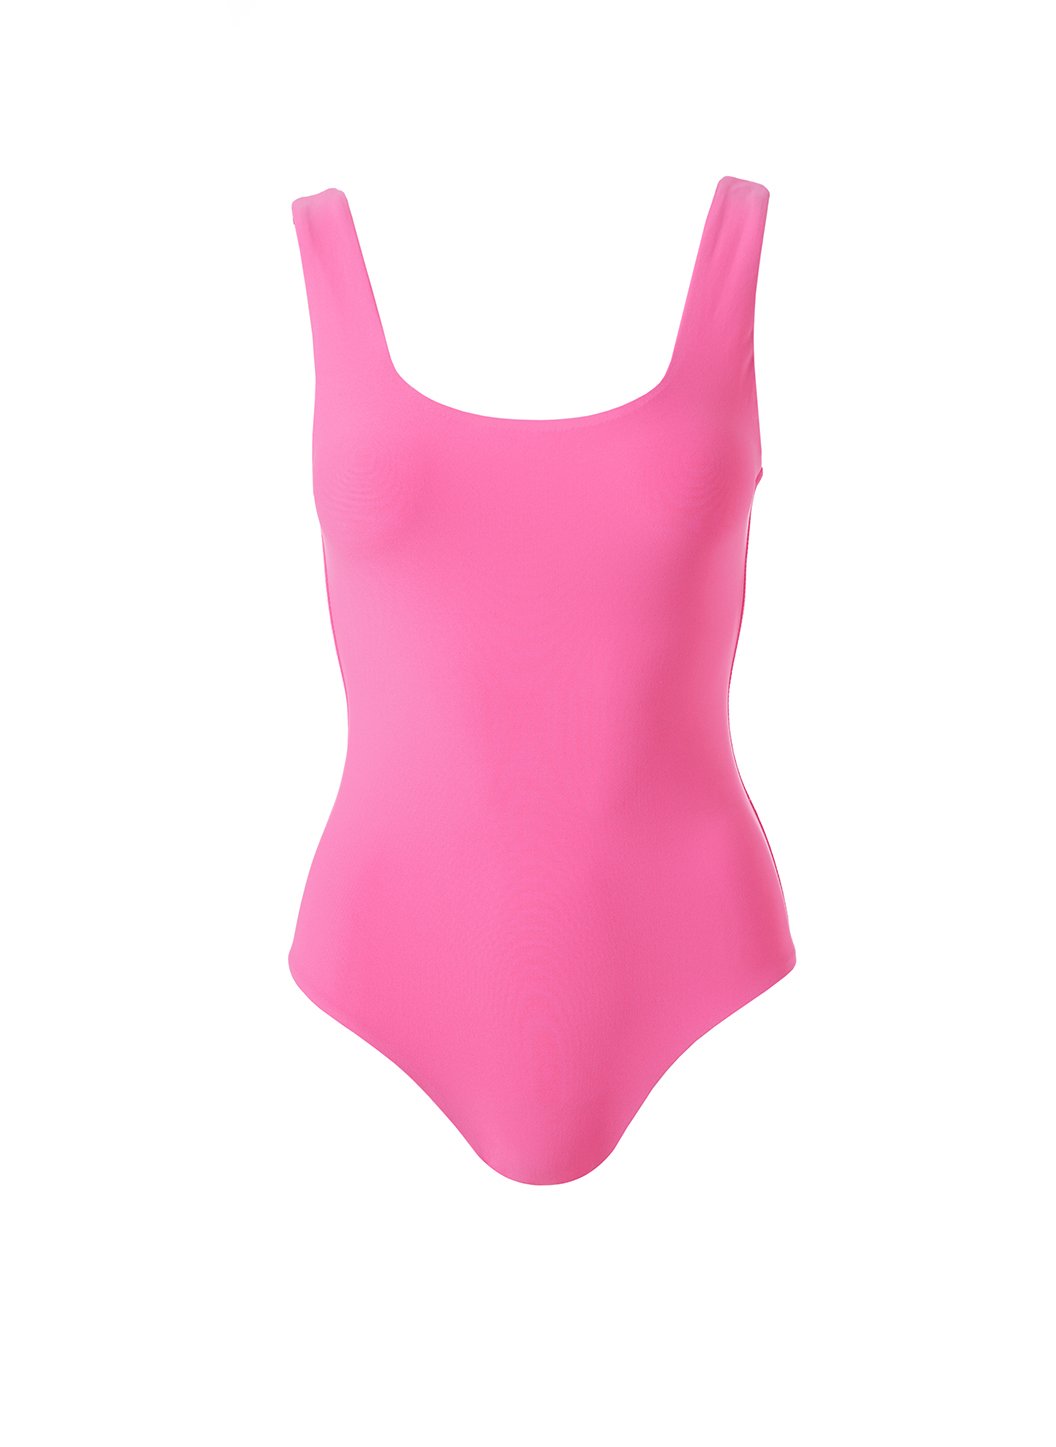 Croatia Flamingo Swimsuit Cutout 